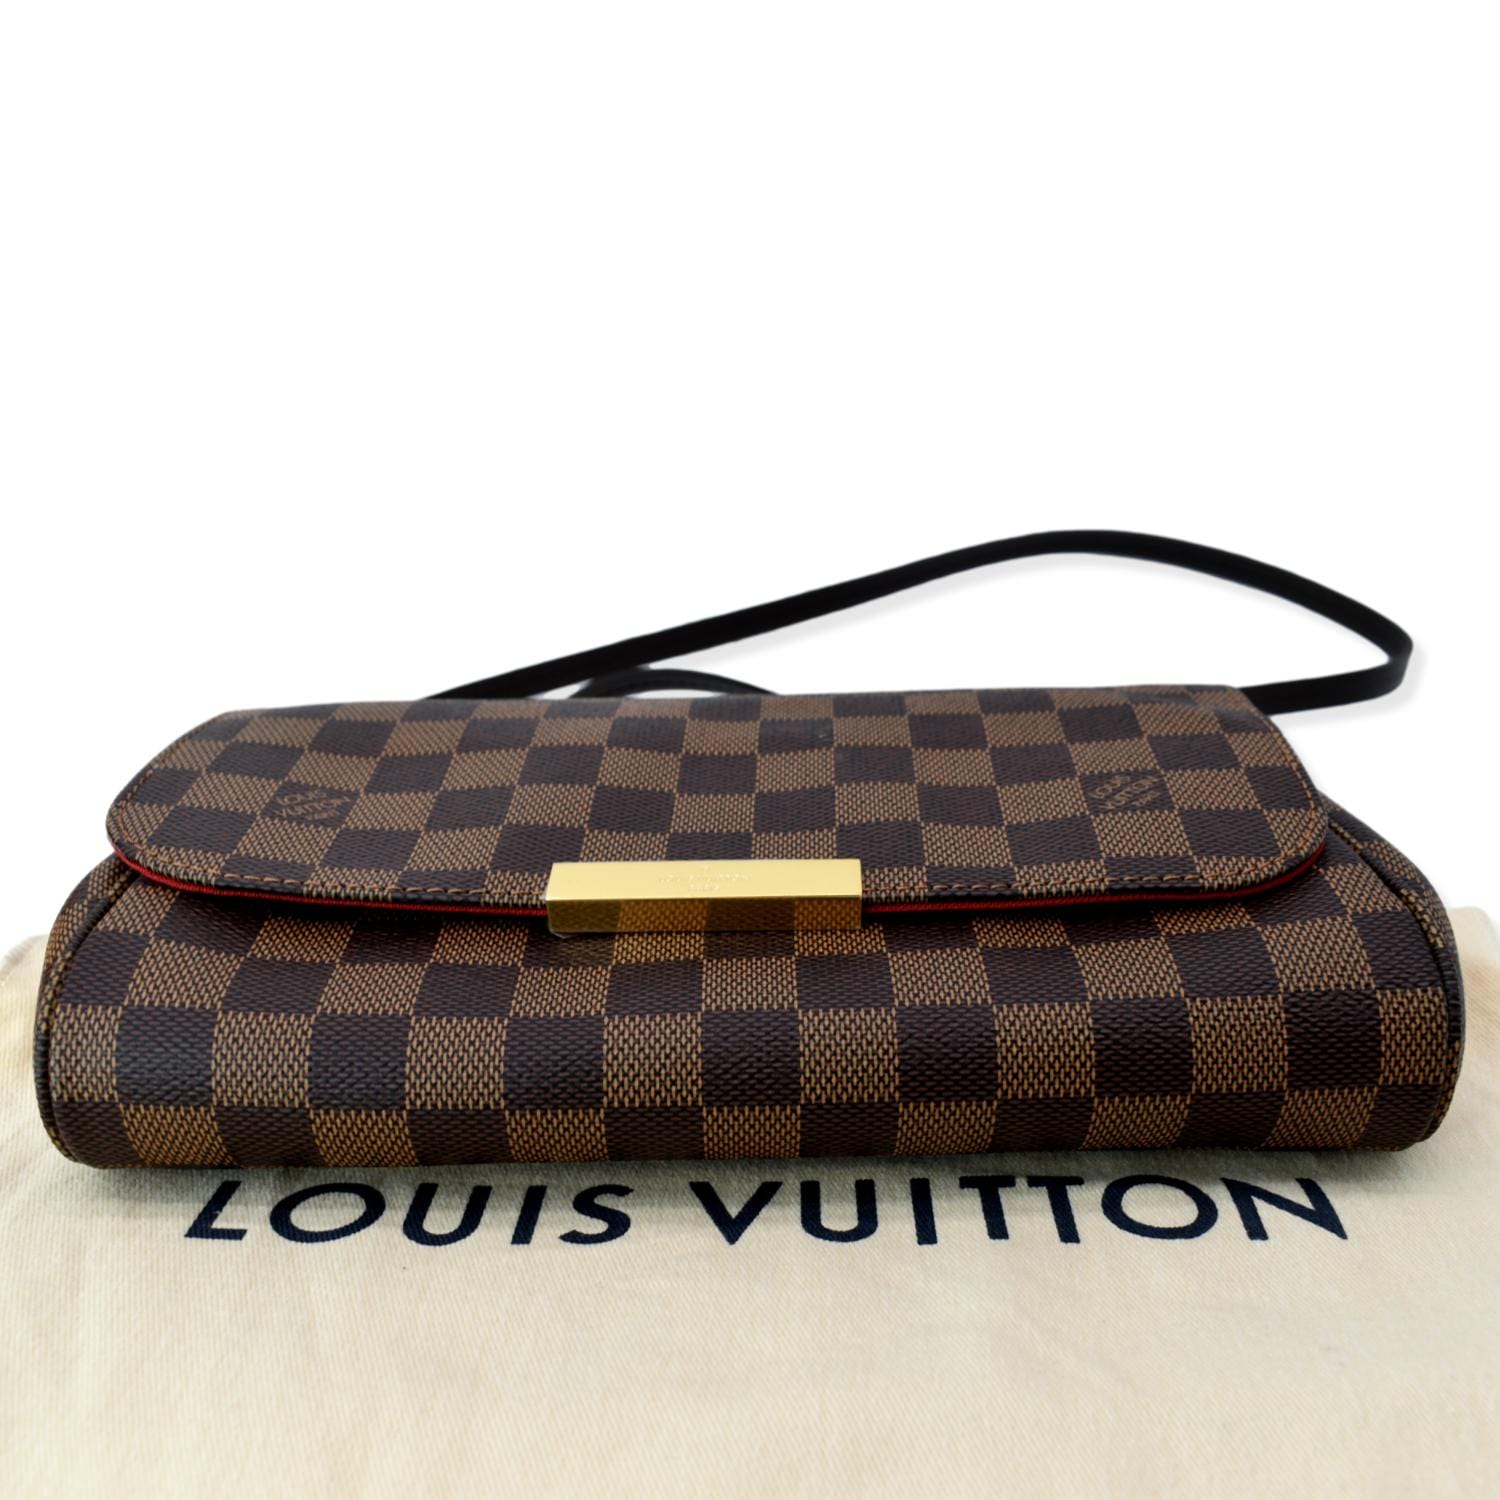 Review] Louis Vuitton Favorite MM in Damier Ebene : r/DHgate